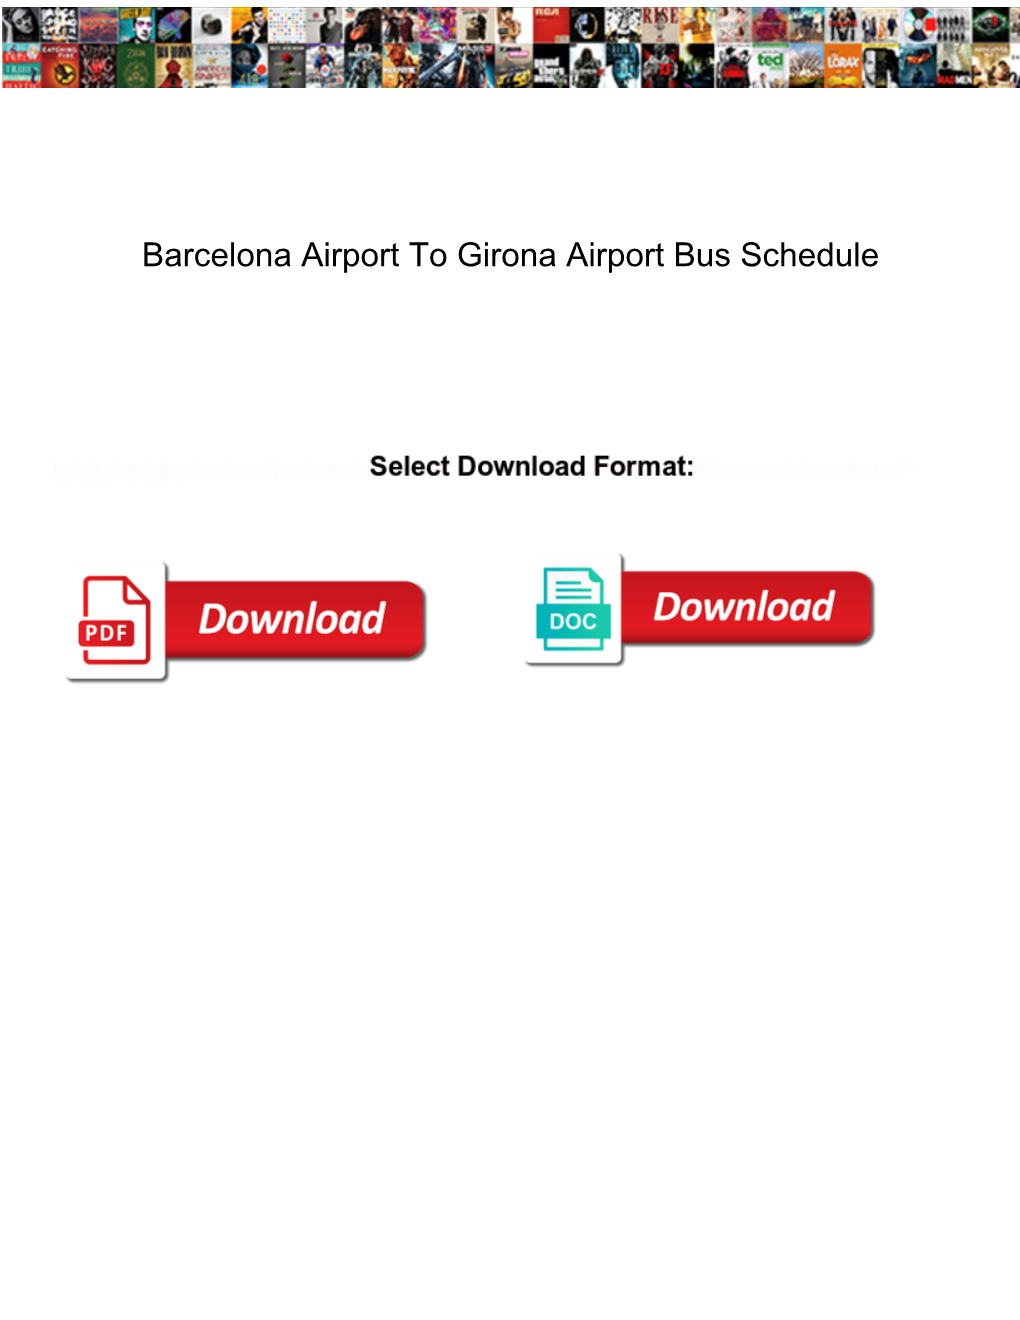 Barcelona Airport to Girona Airport Bus Schedule